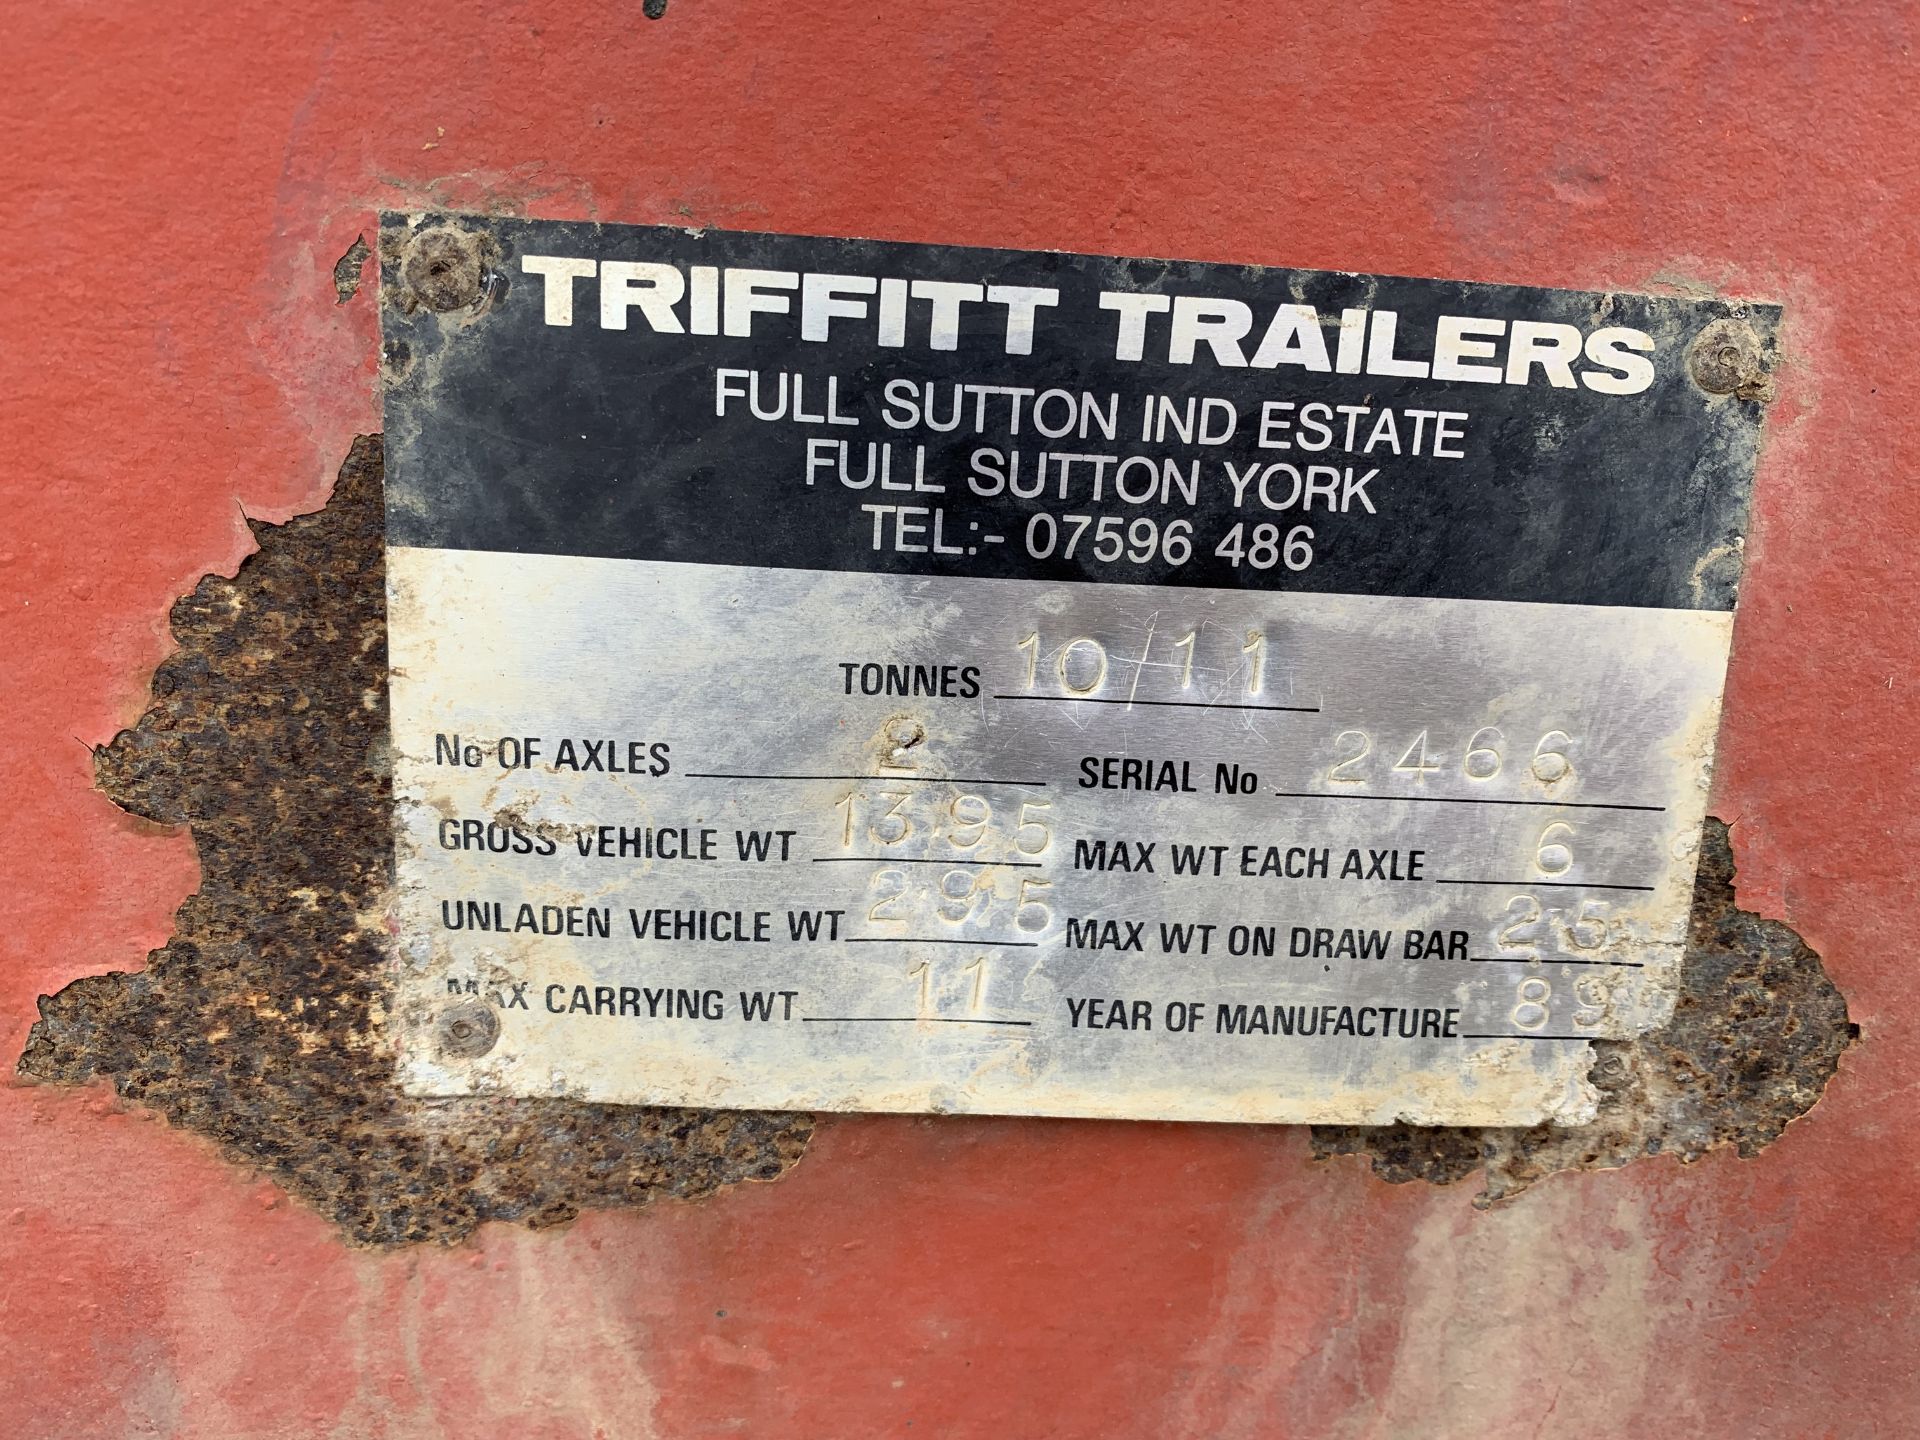 1989 Triffitt twin axle 10/11 ton corn trailer - Image 2 of 4